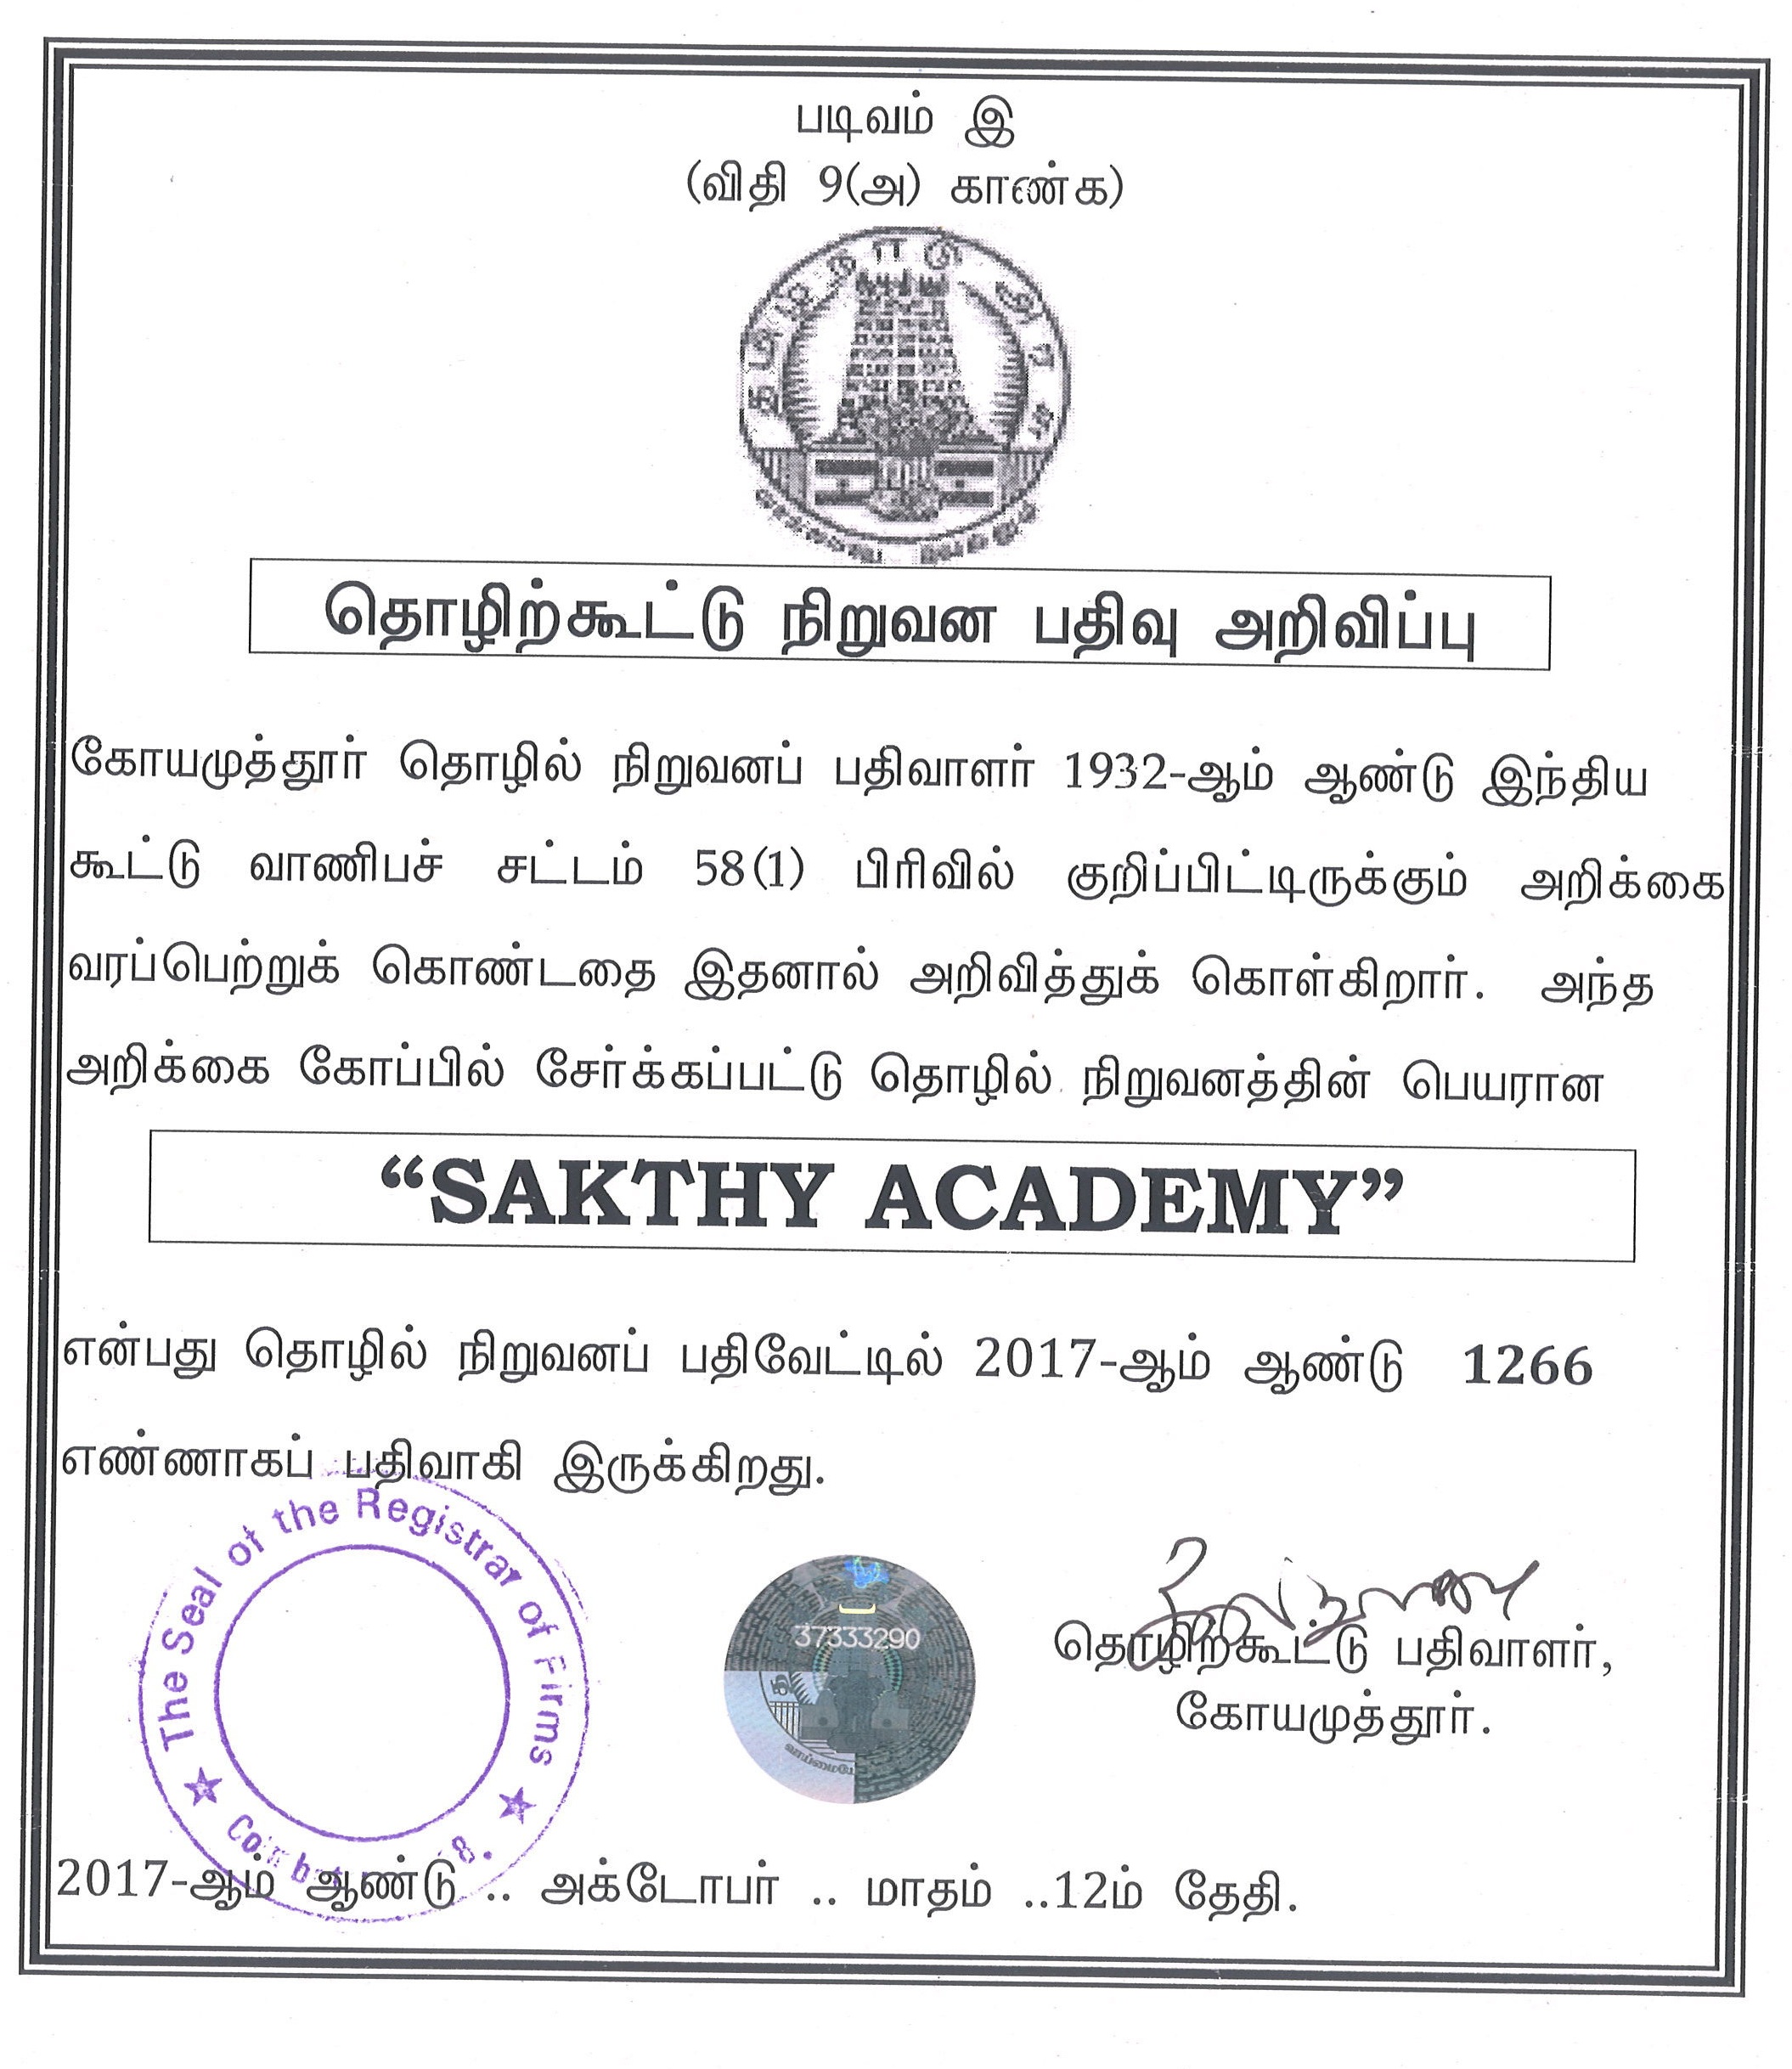 Sakthy Academy